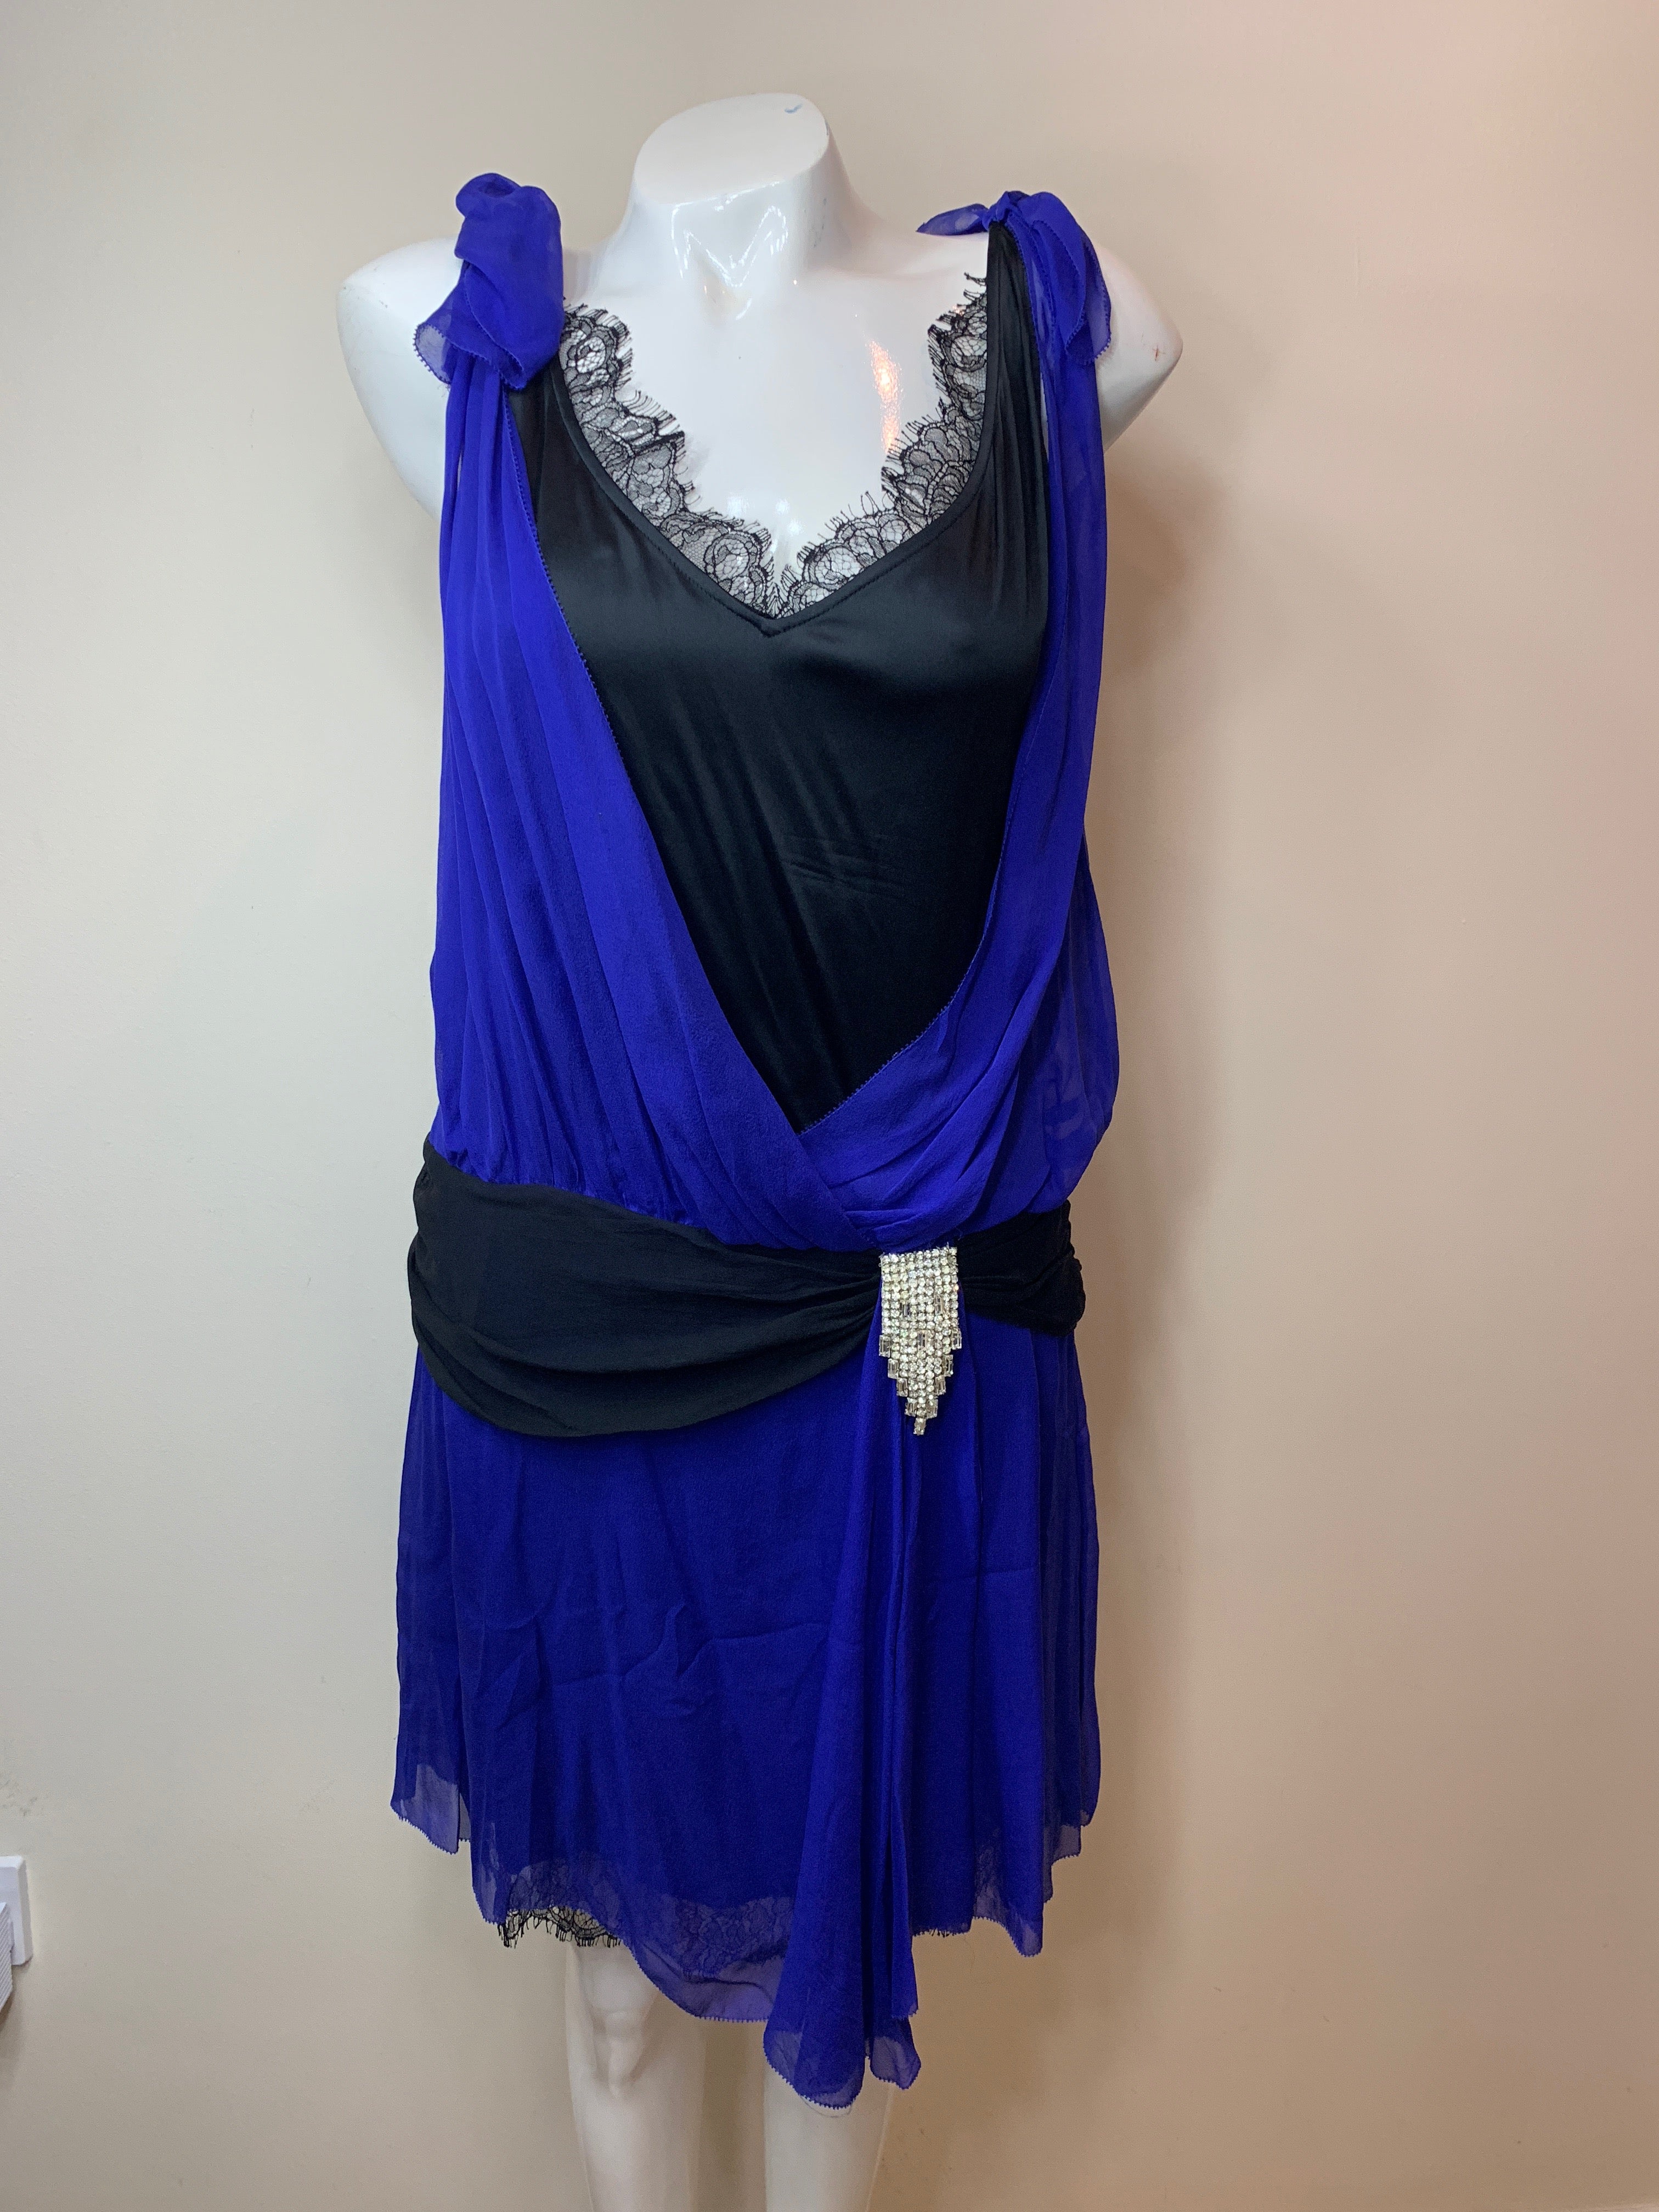 DVF ( Diane Von Furstenberg) Royal Blue Dress with Black Slip and Crystal Embellishment